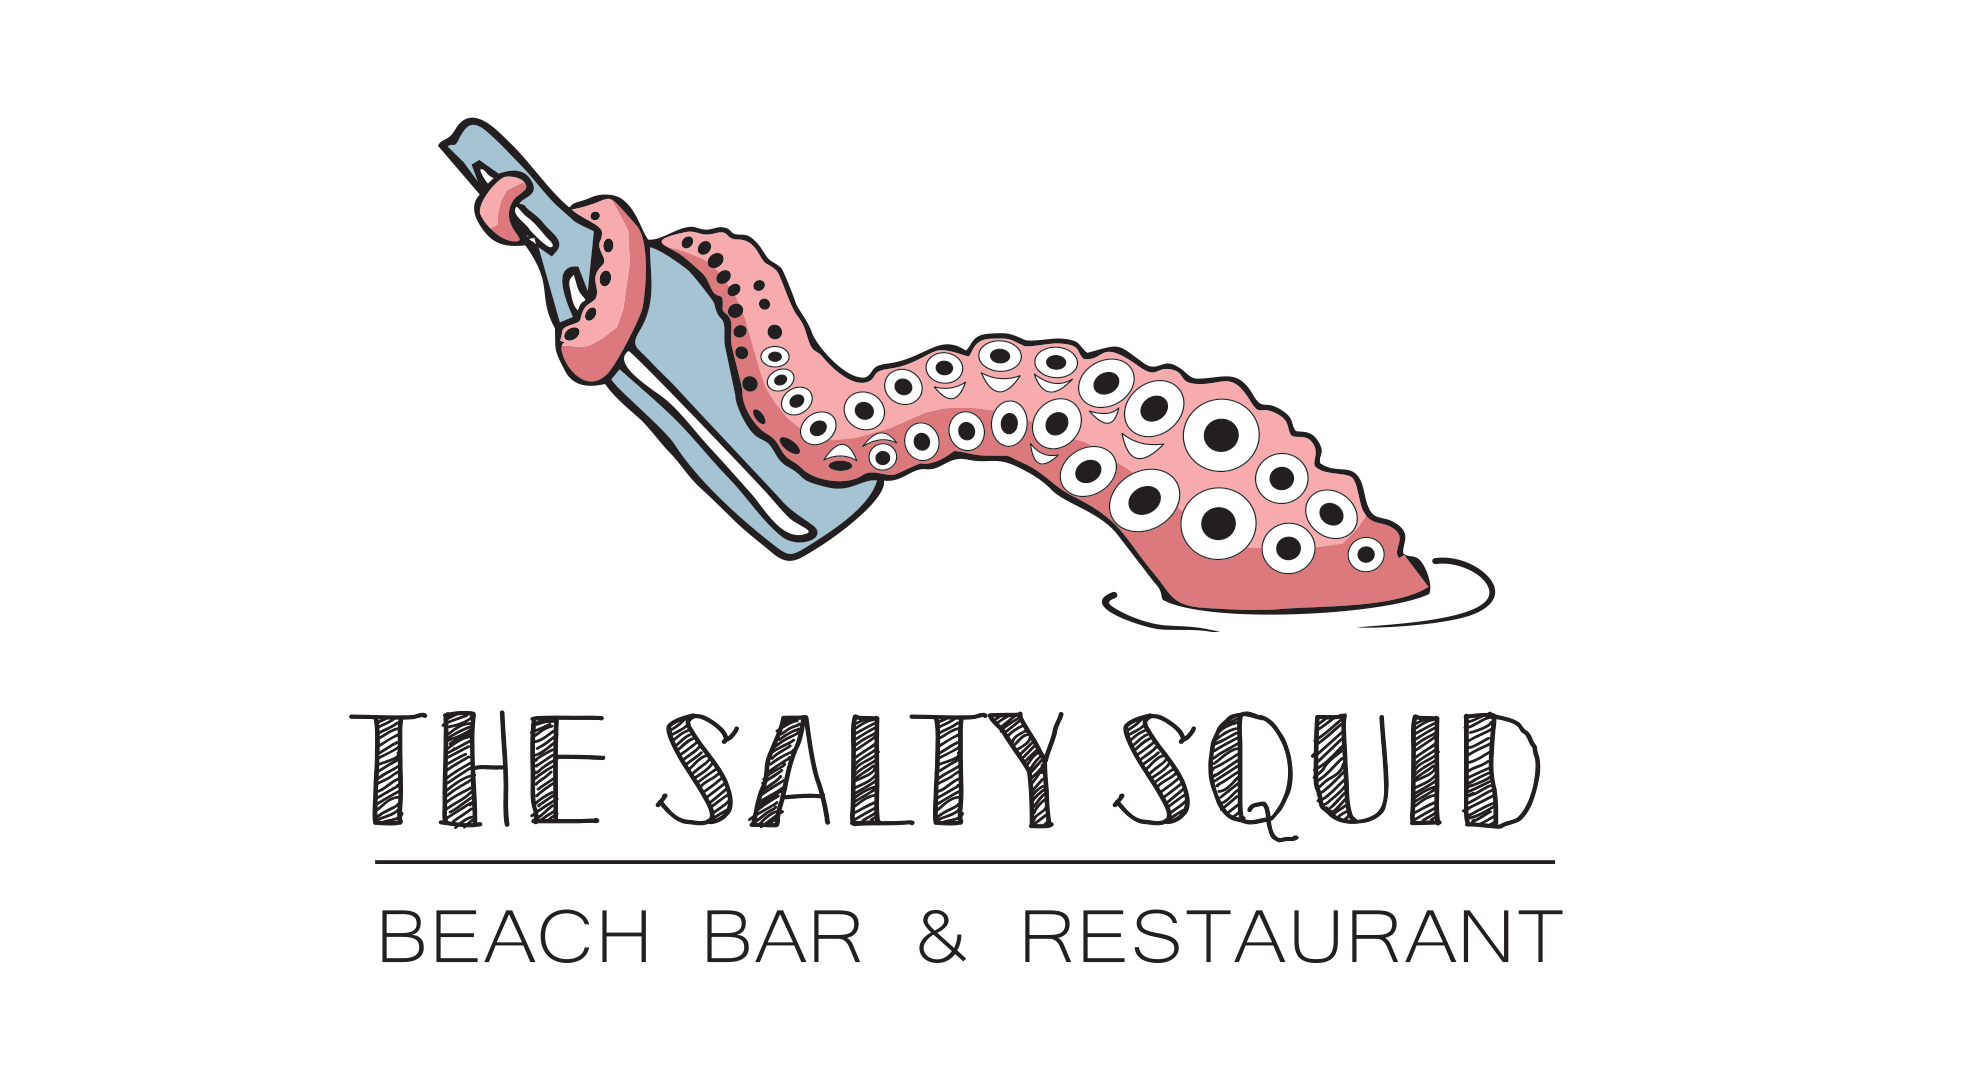 The Salty Squid Beach Bar and Restaurant